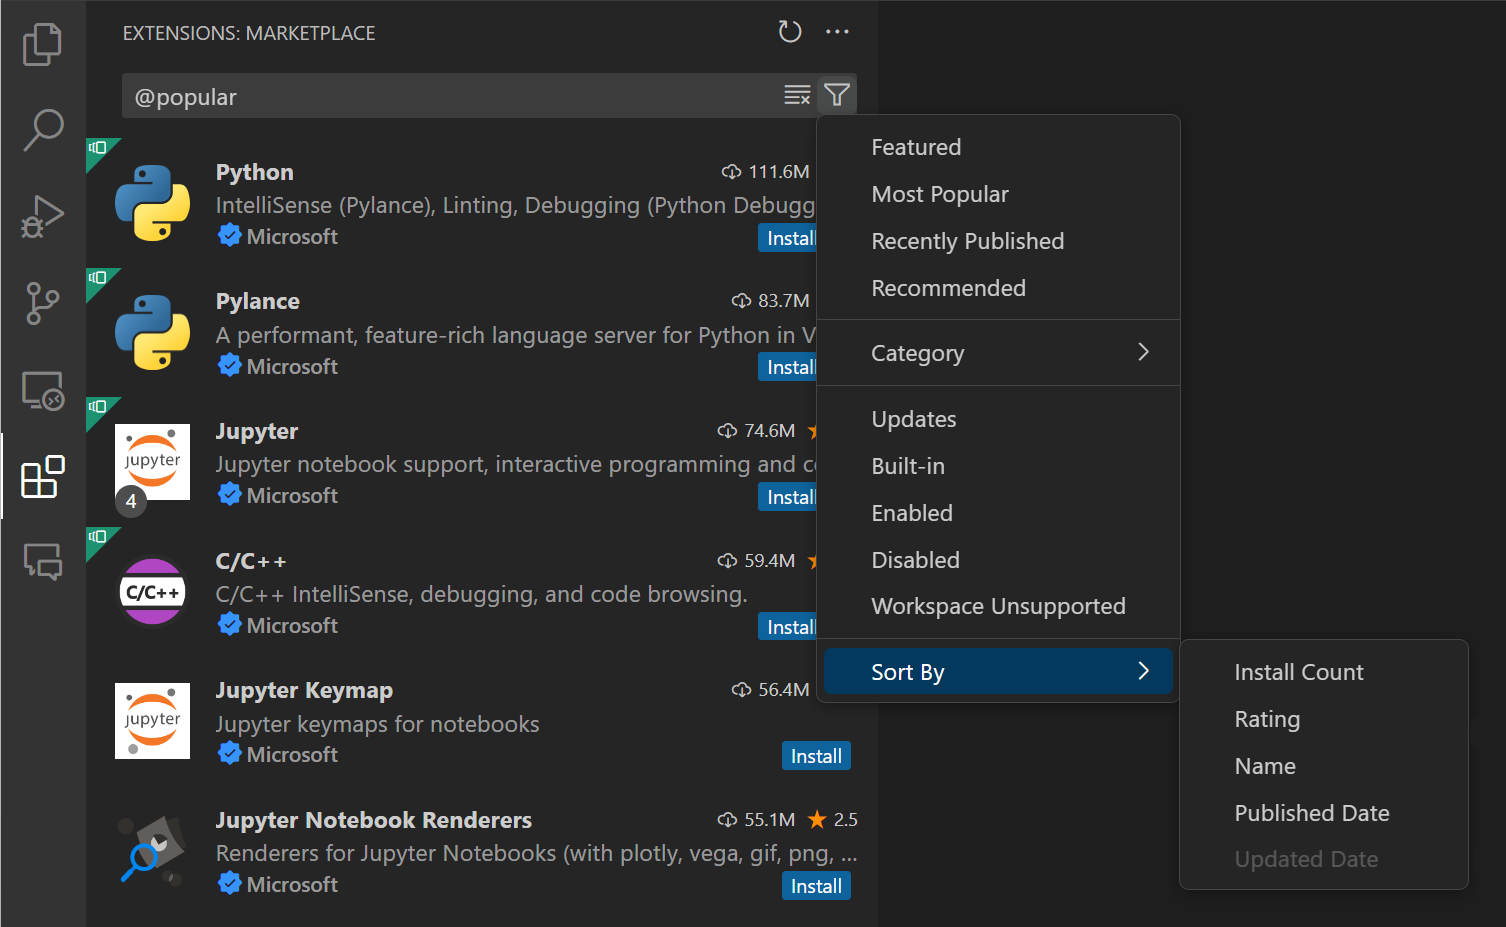 Extensions view filter context menu